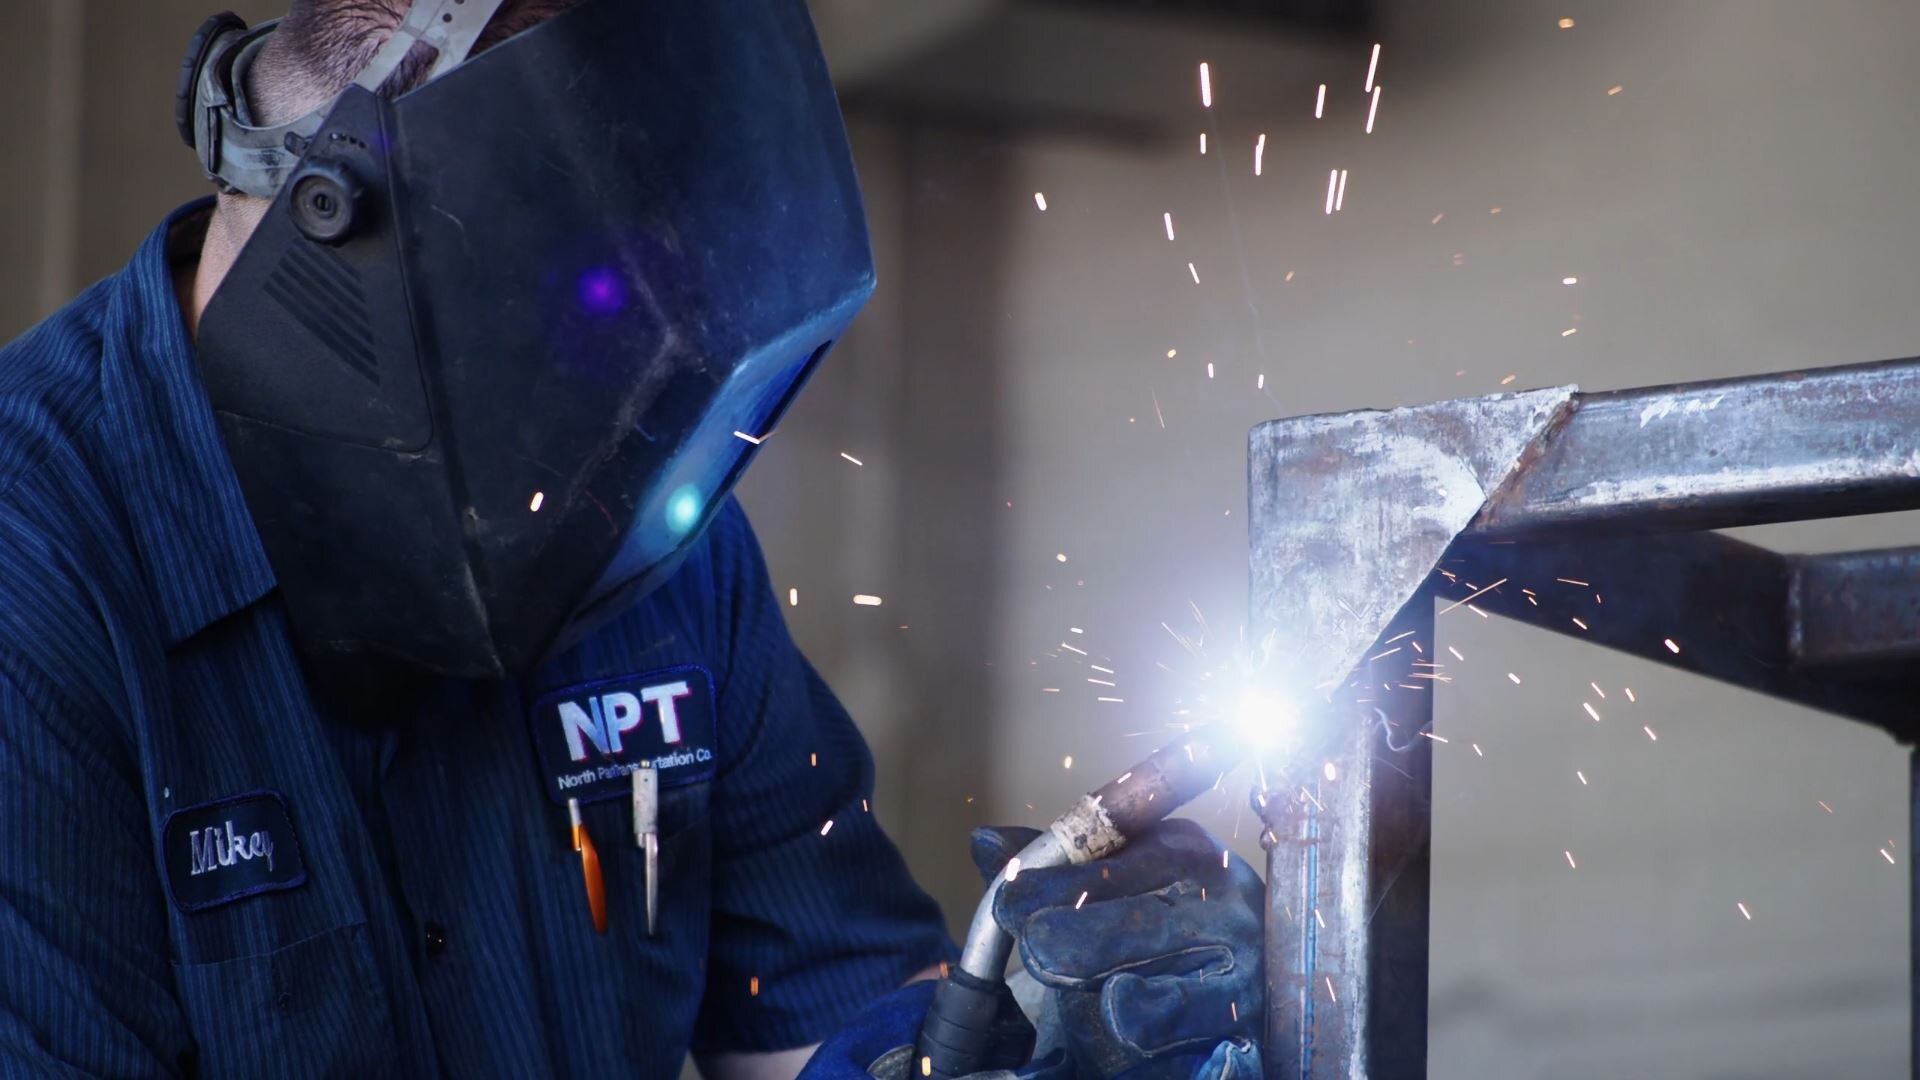 NPT employee welding steel